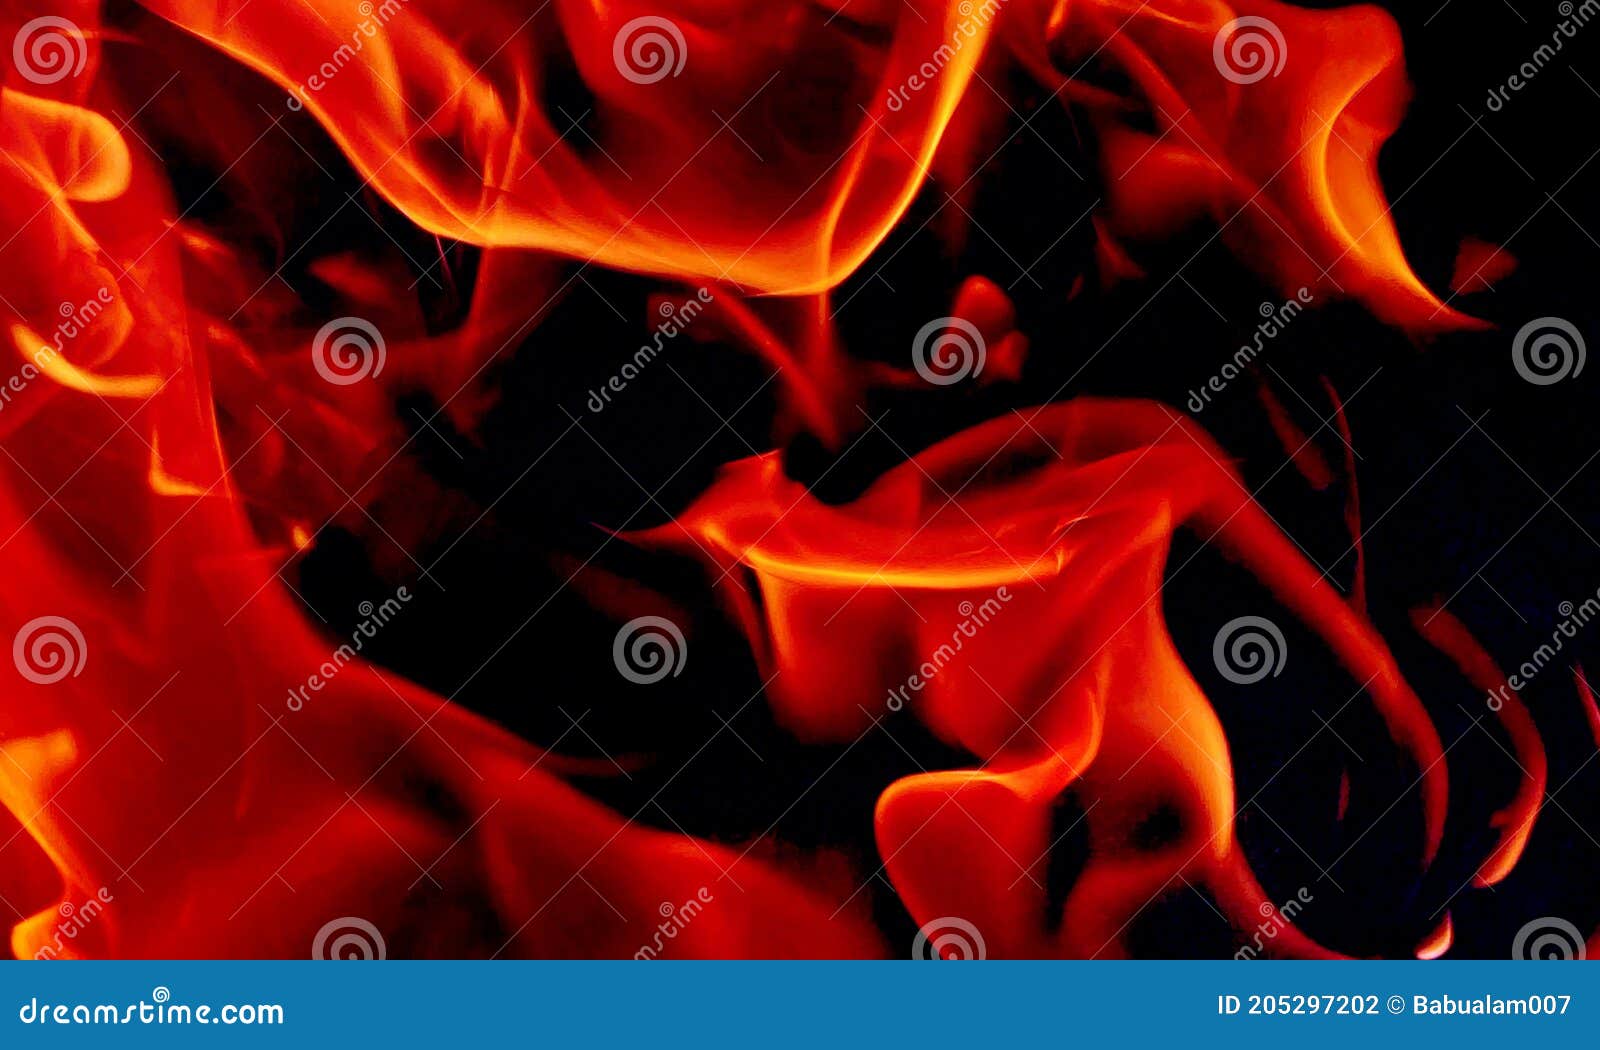 Orange Flame in Black Background · Free Stock Photo